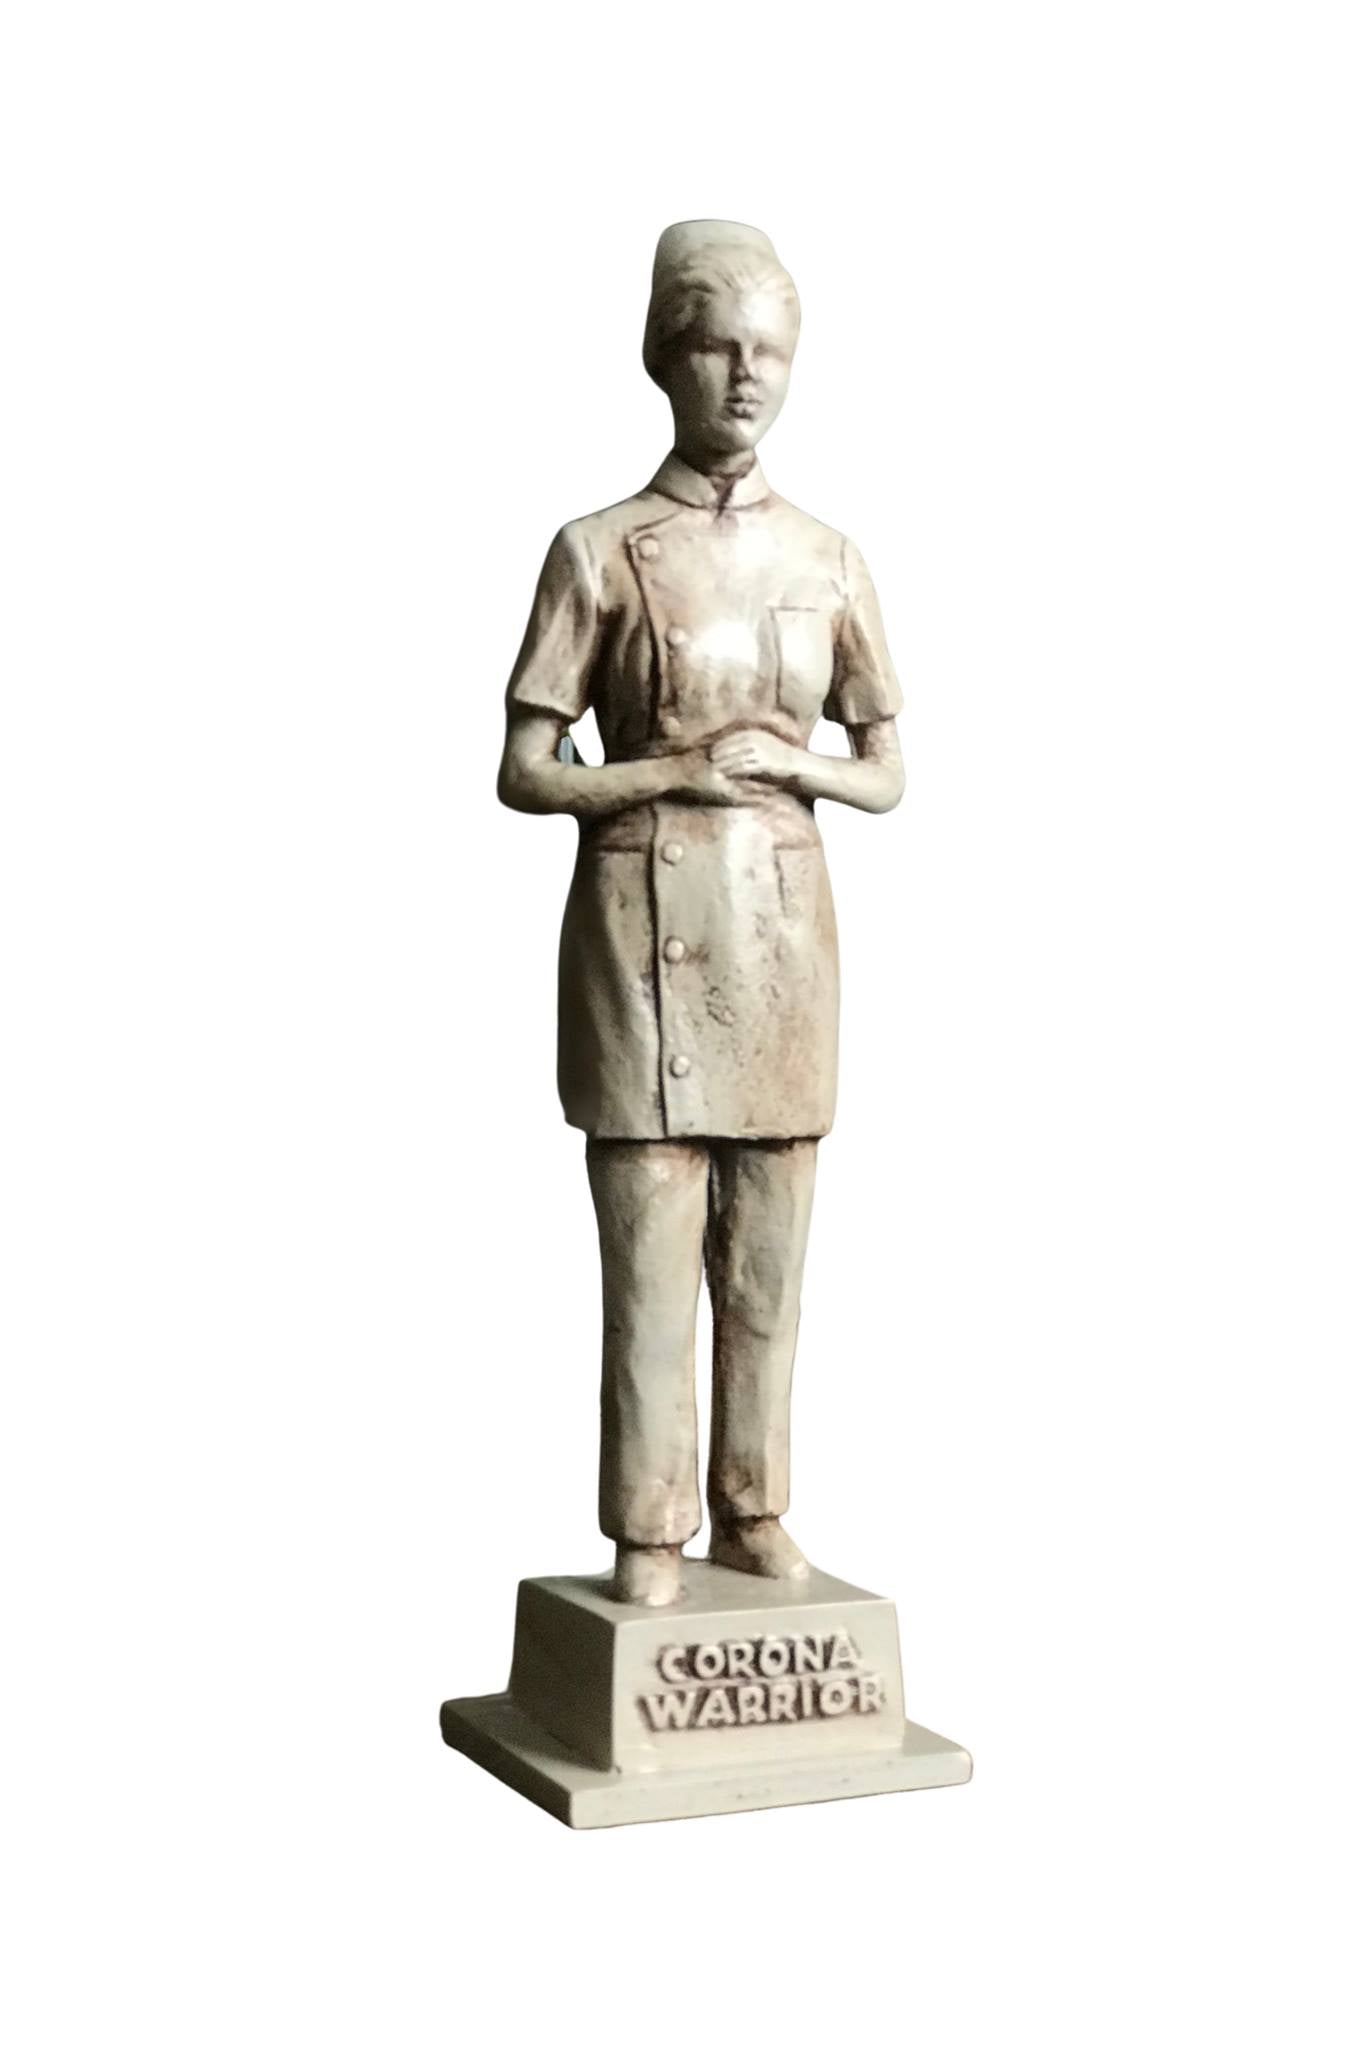 Corona Warrior statue